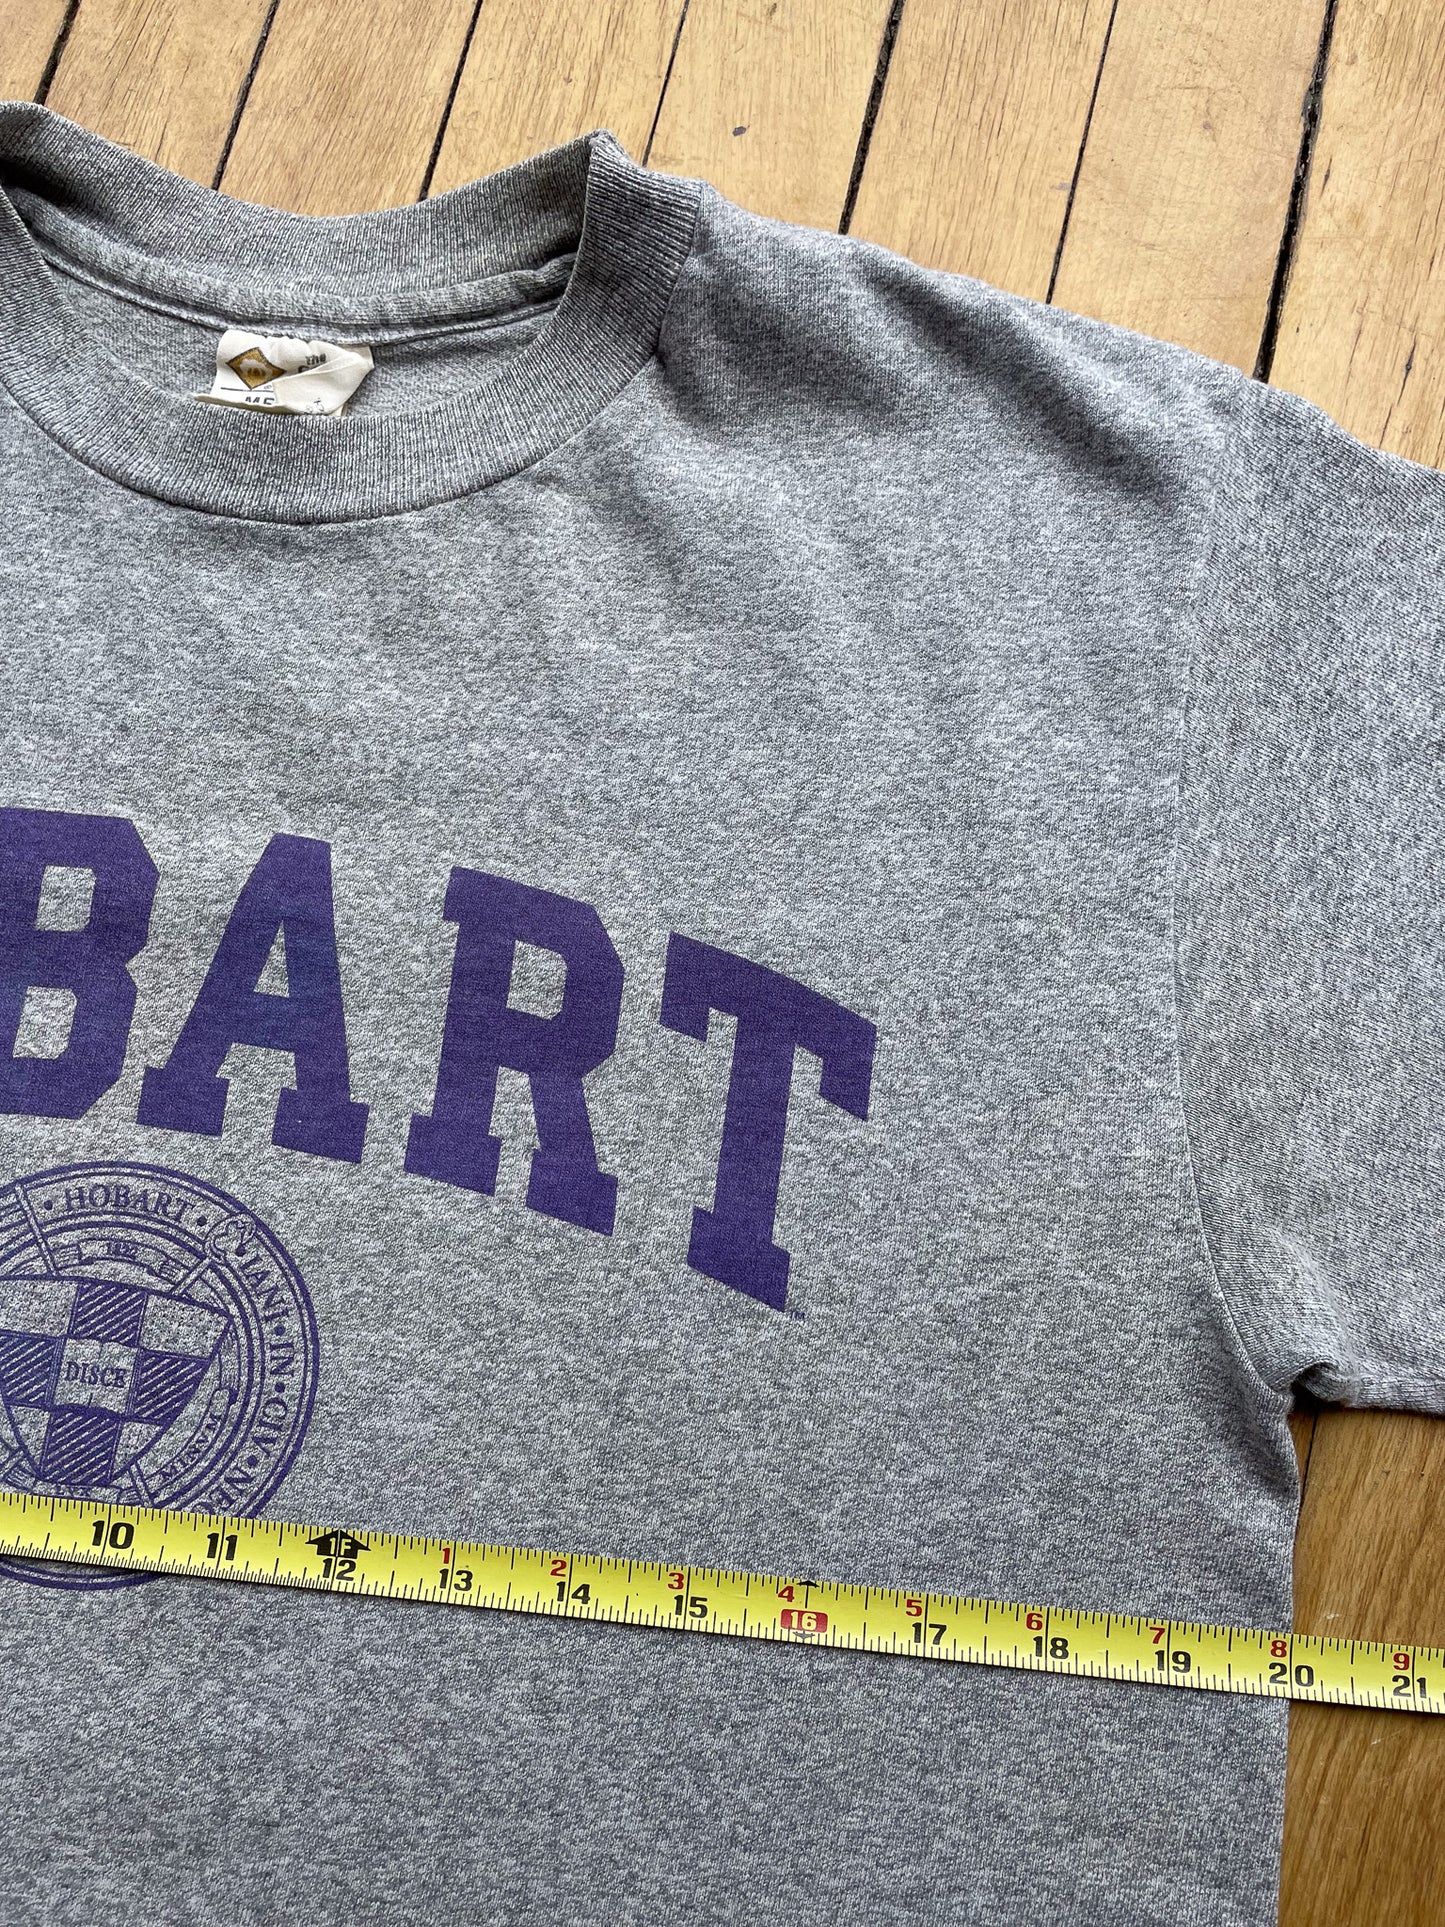 Hobart T-Shirt—[M]